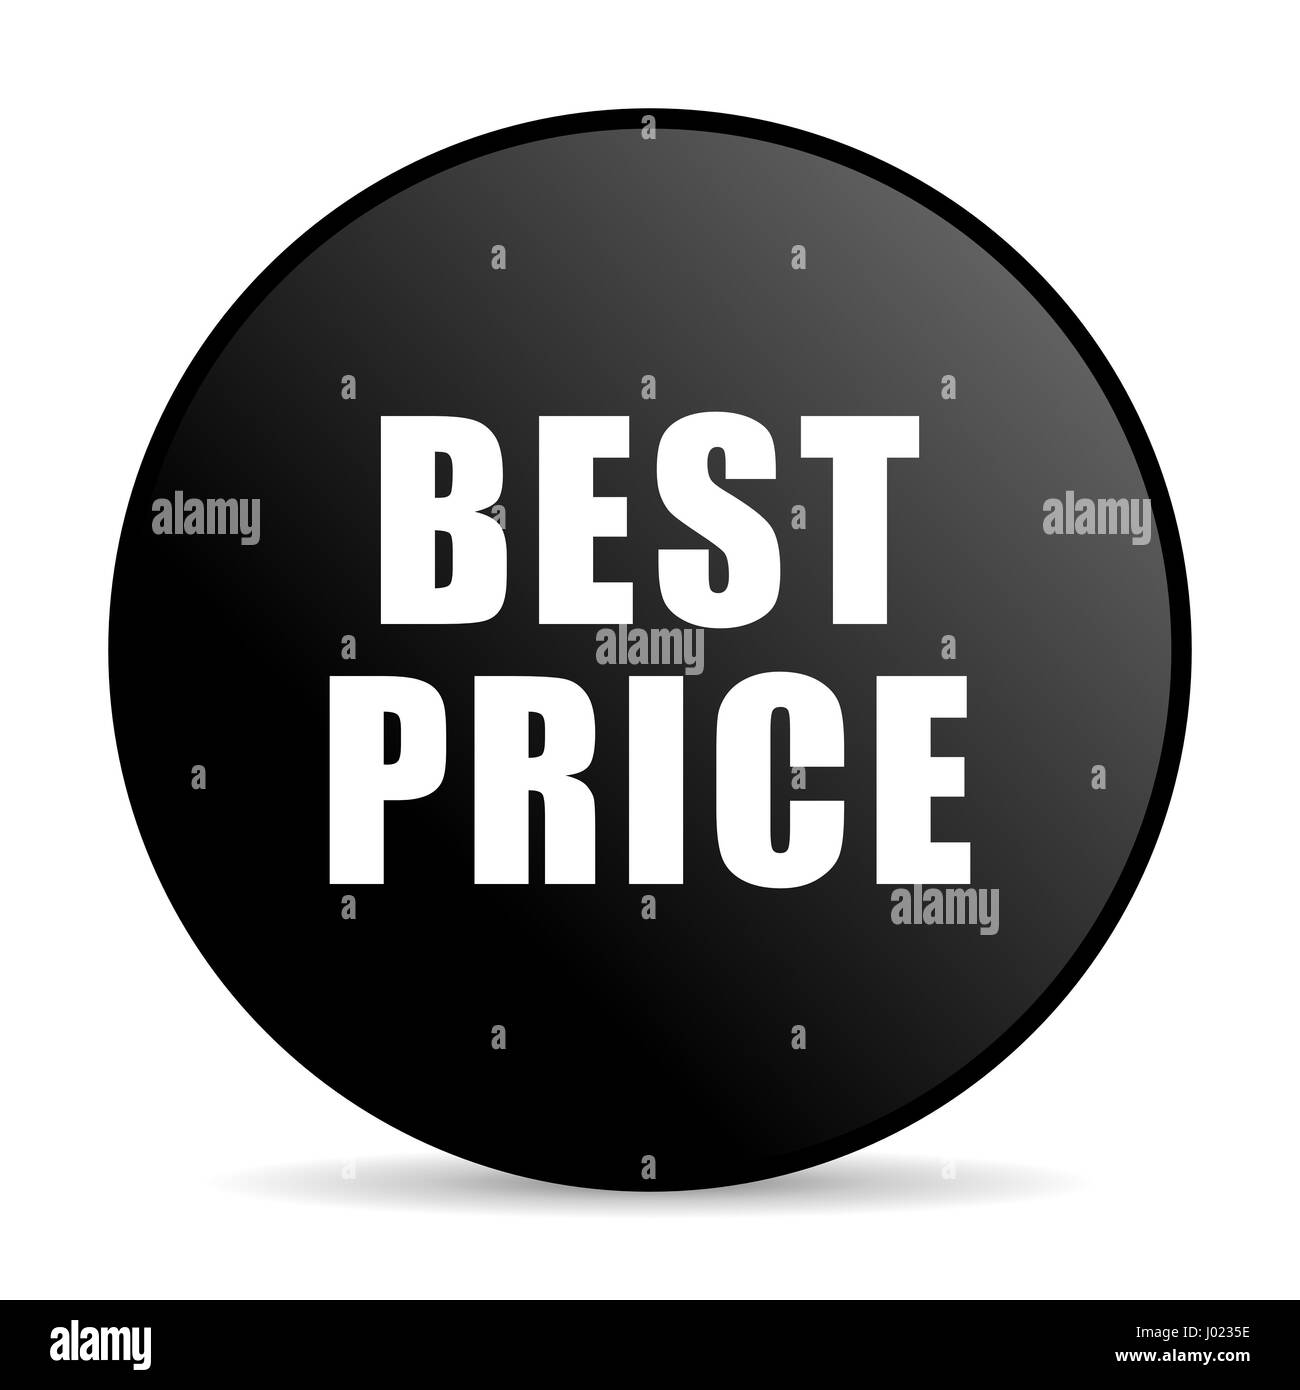 Best seller black color web design round internet icon on white background  Stock Photo - Alamy